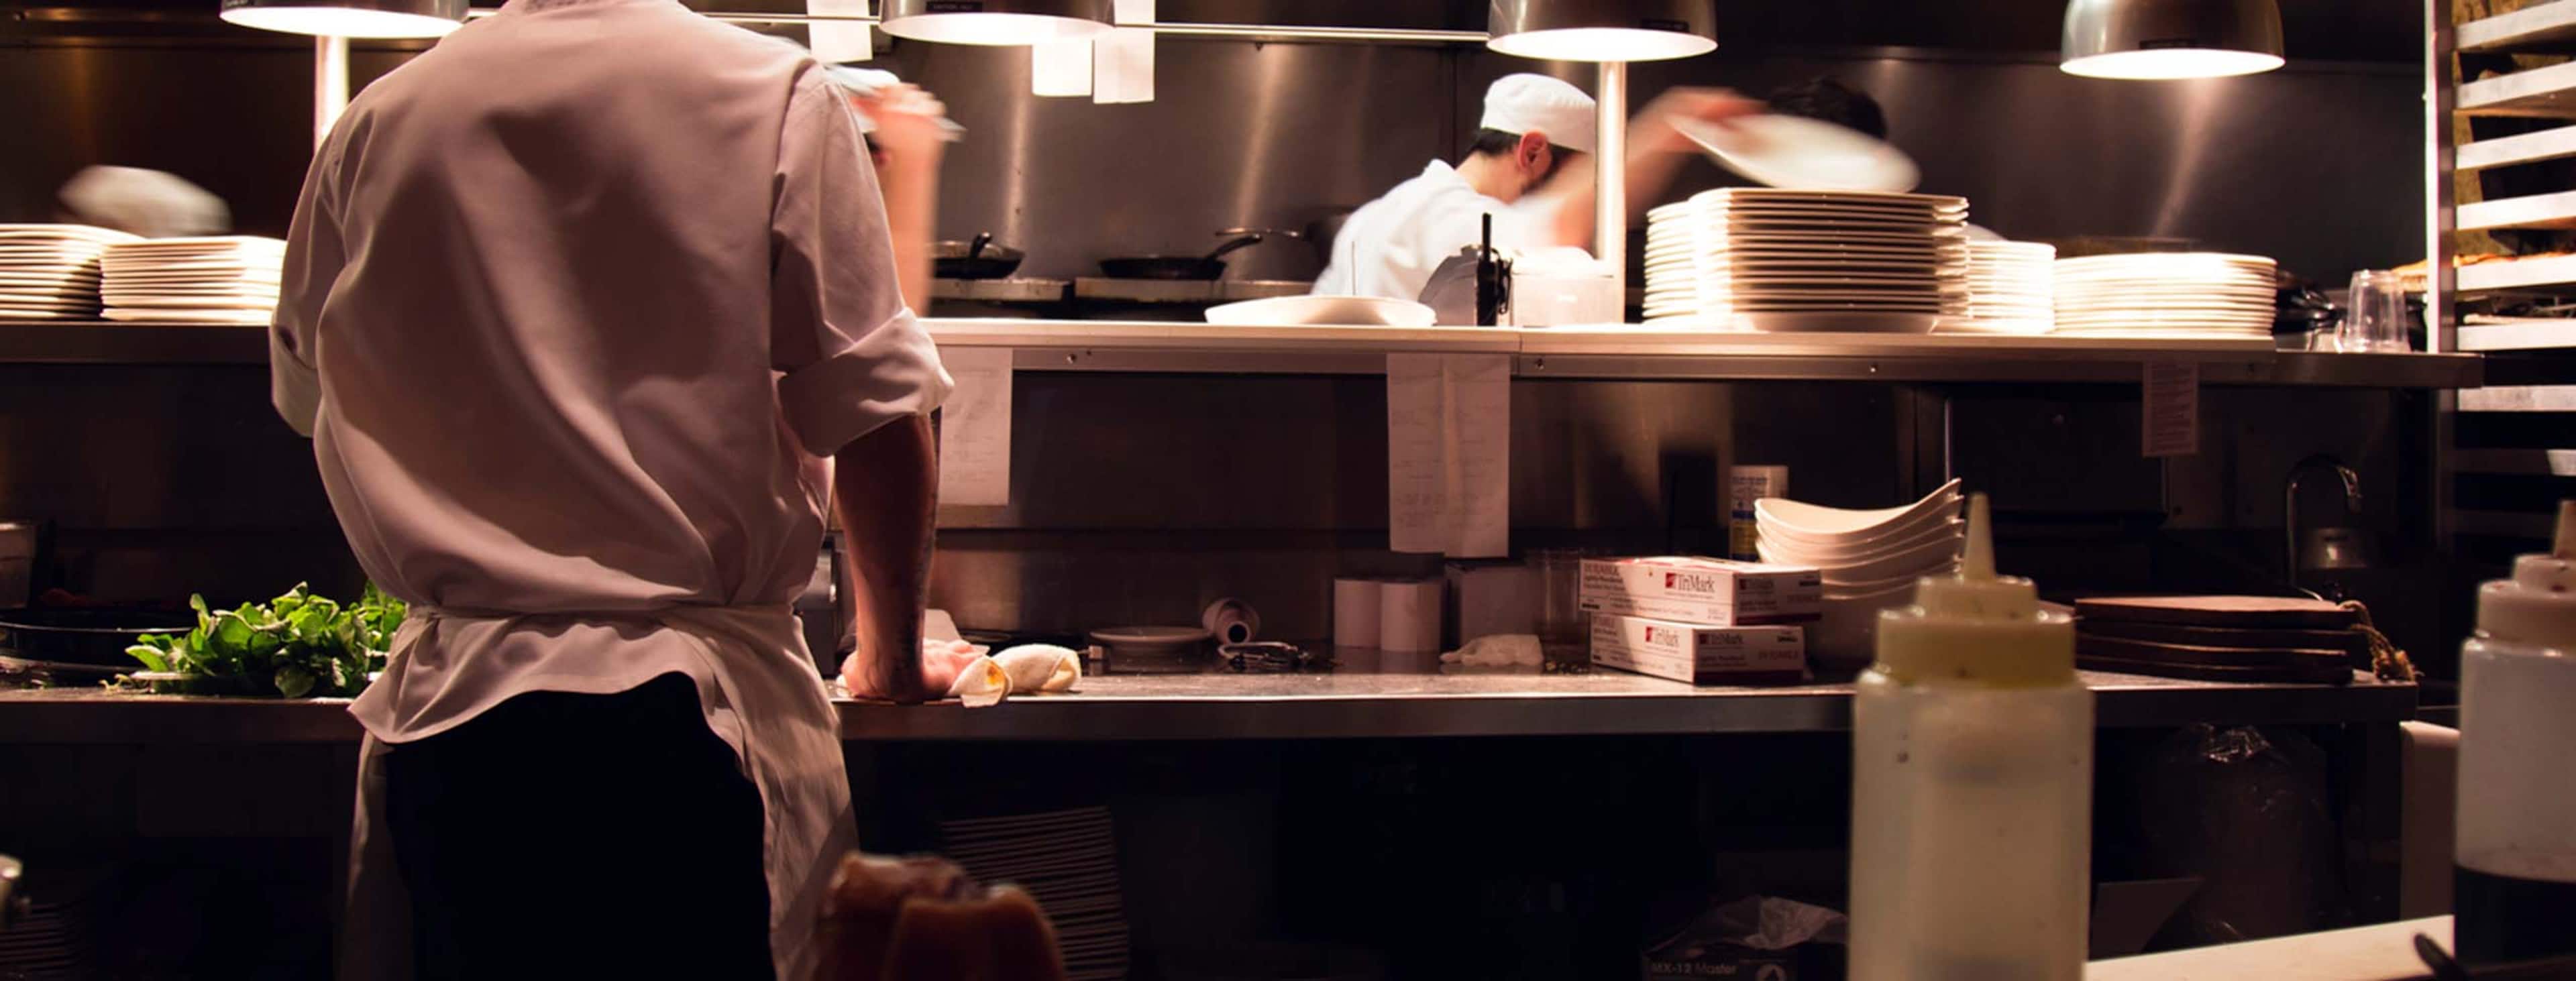 workers in a restaurant kitchen